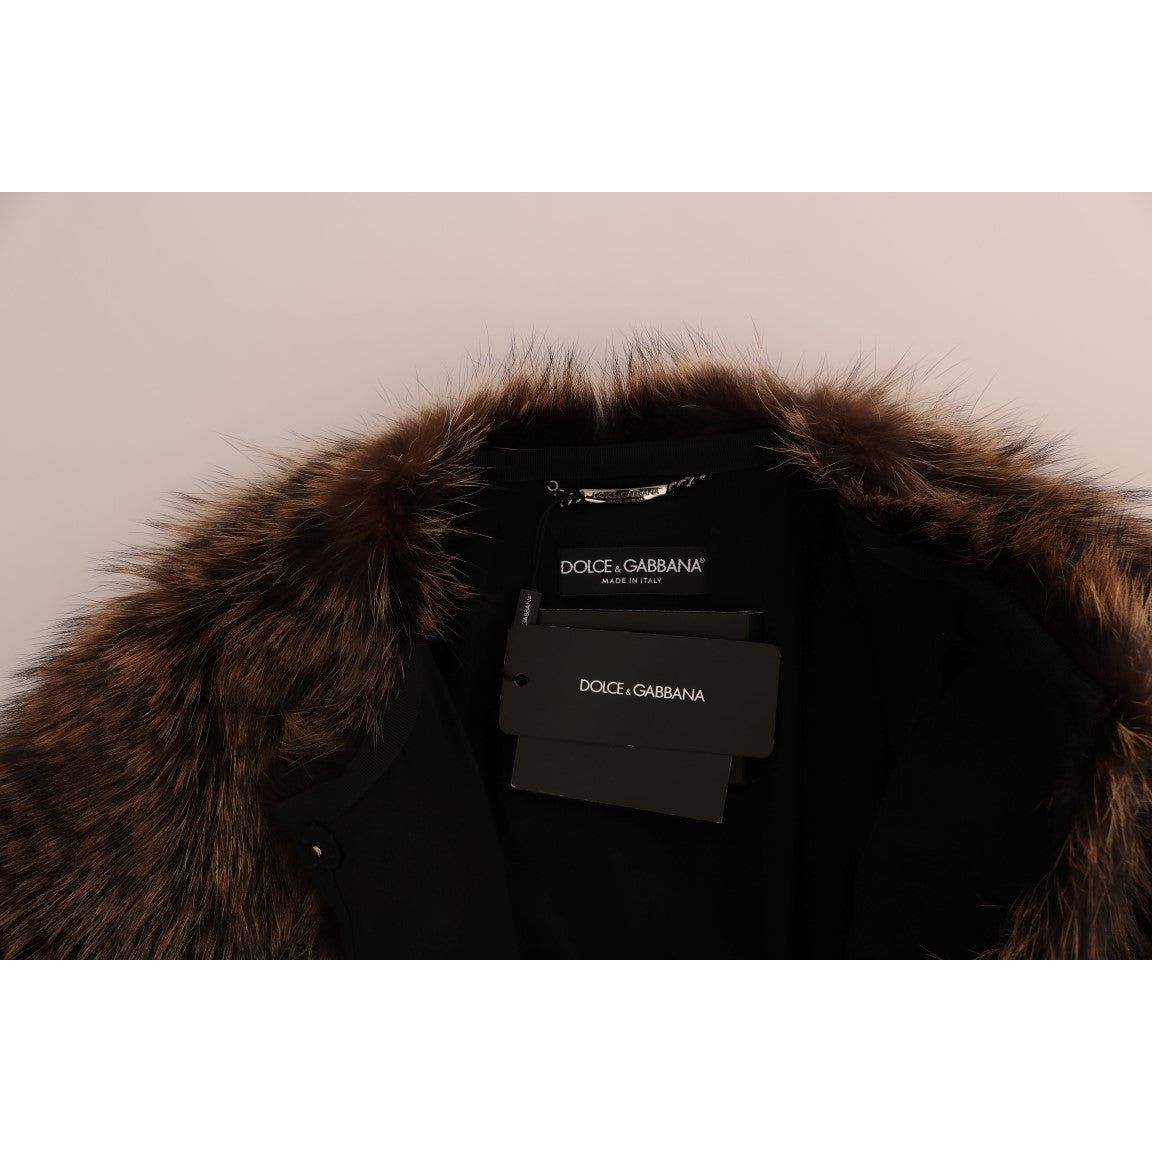 Dolce & Gabbana Elegant Brown Raccoon Fur Knee-Length Coat Coats & Jackets brown-raccoon-fur-coat-jacket 513000-brown-raccoon-fur-coat-jacket-5.jpg